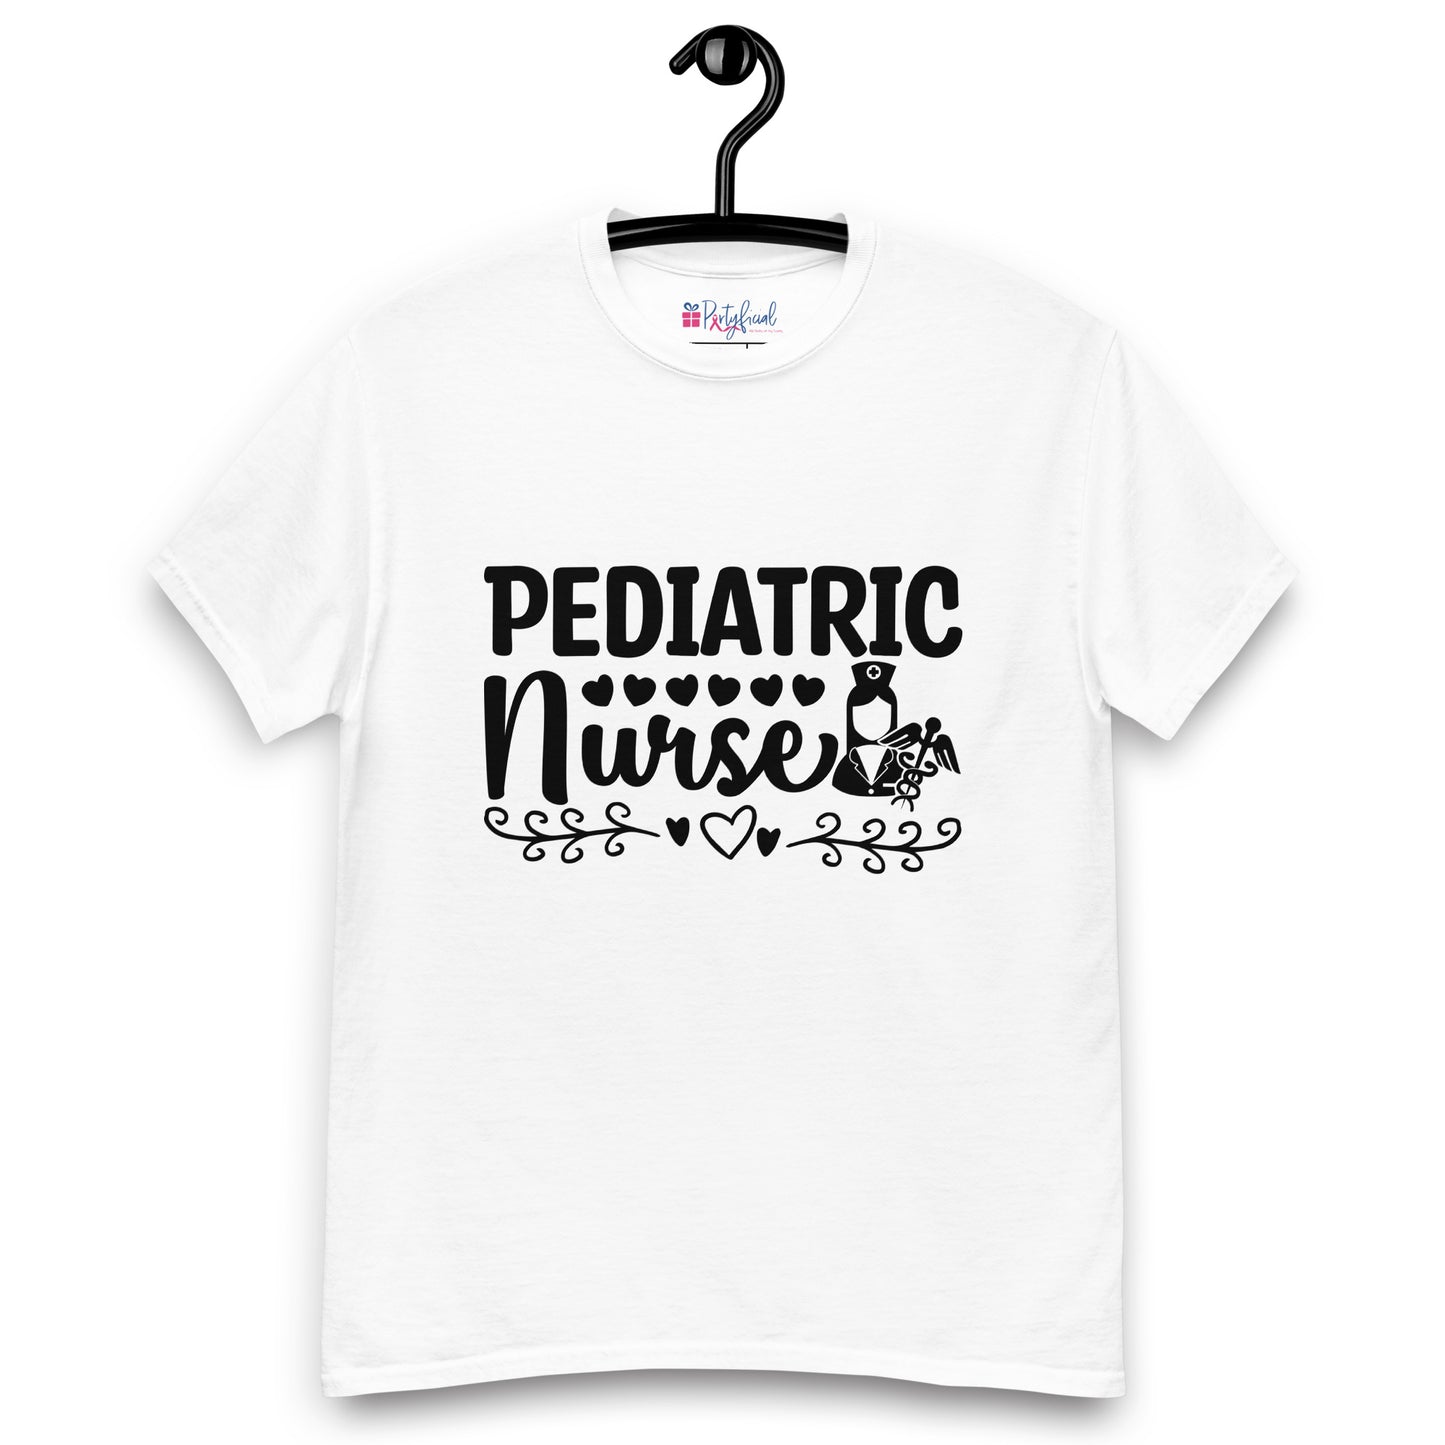 Pediatric Nurse tee